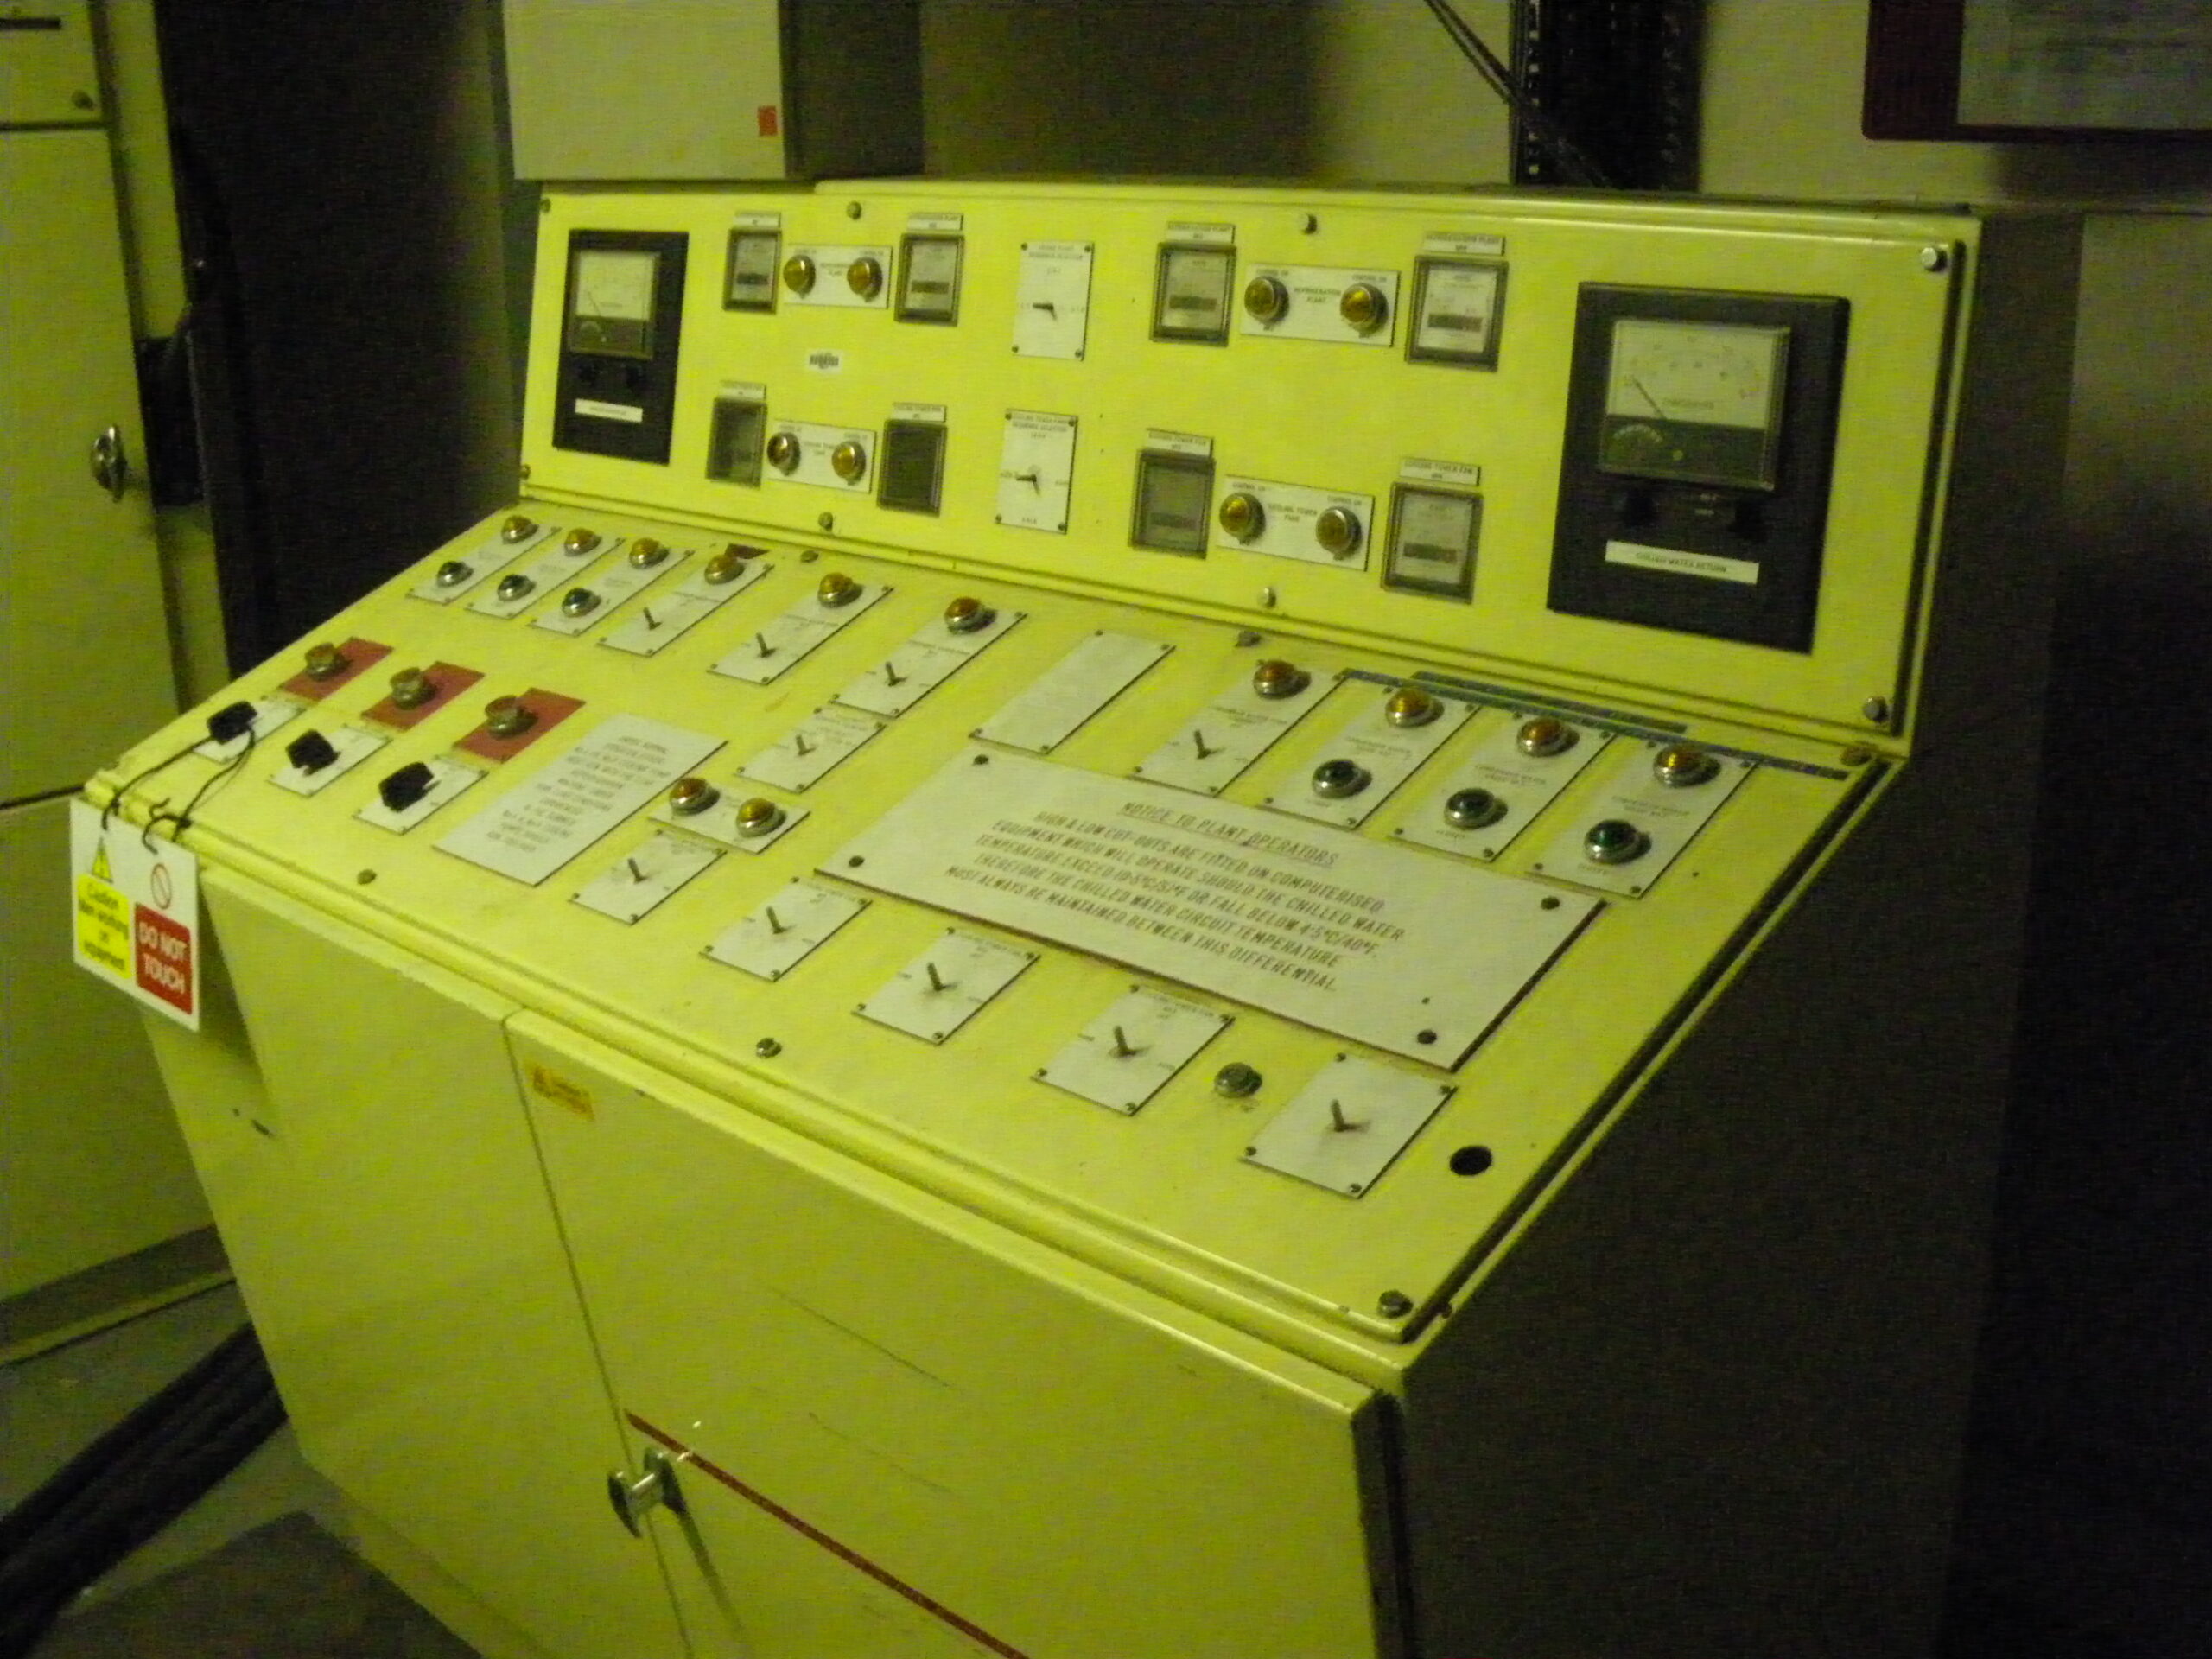 Refrigeration Plant master control console, 13 Sep 2011